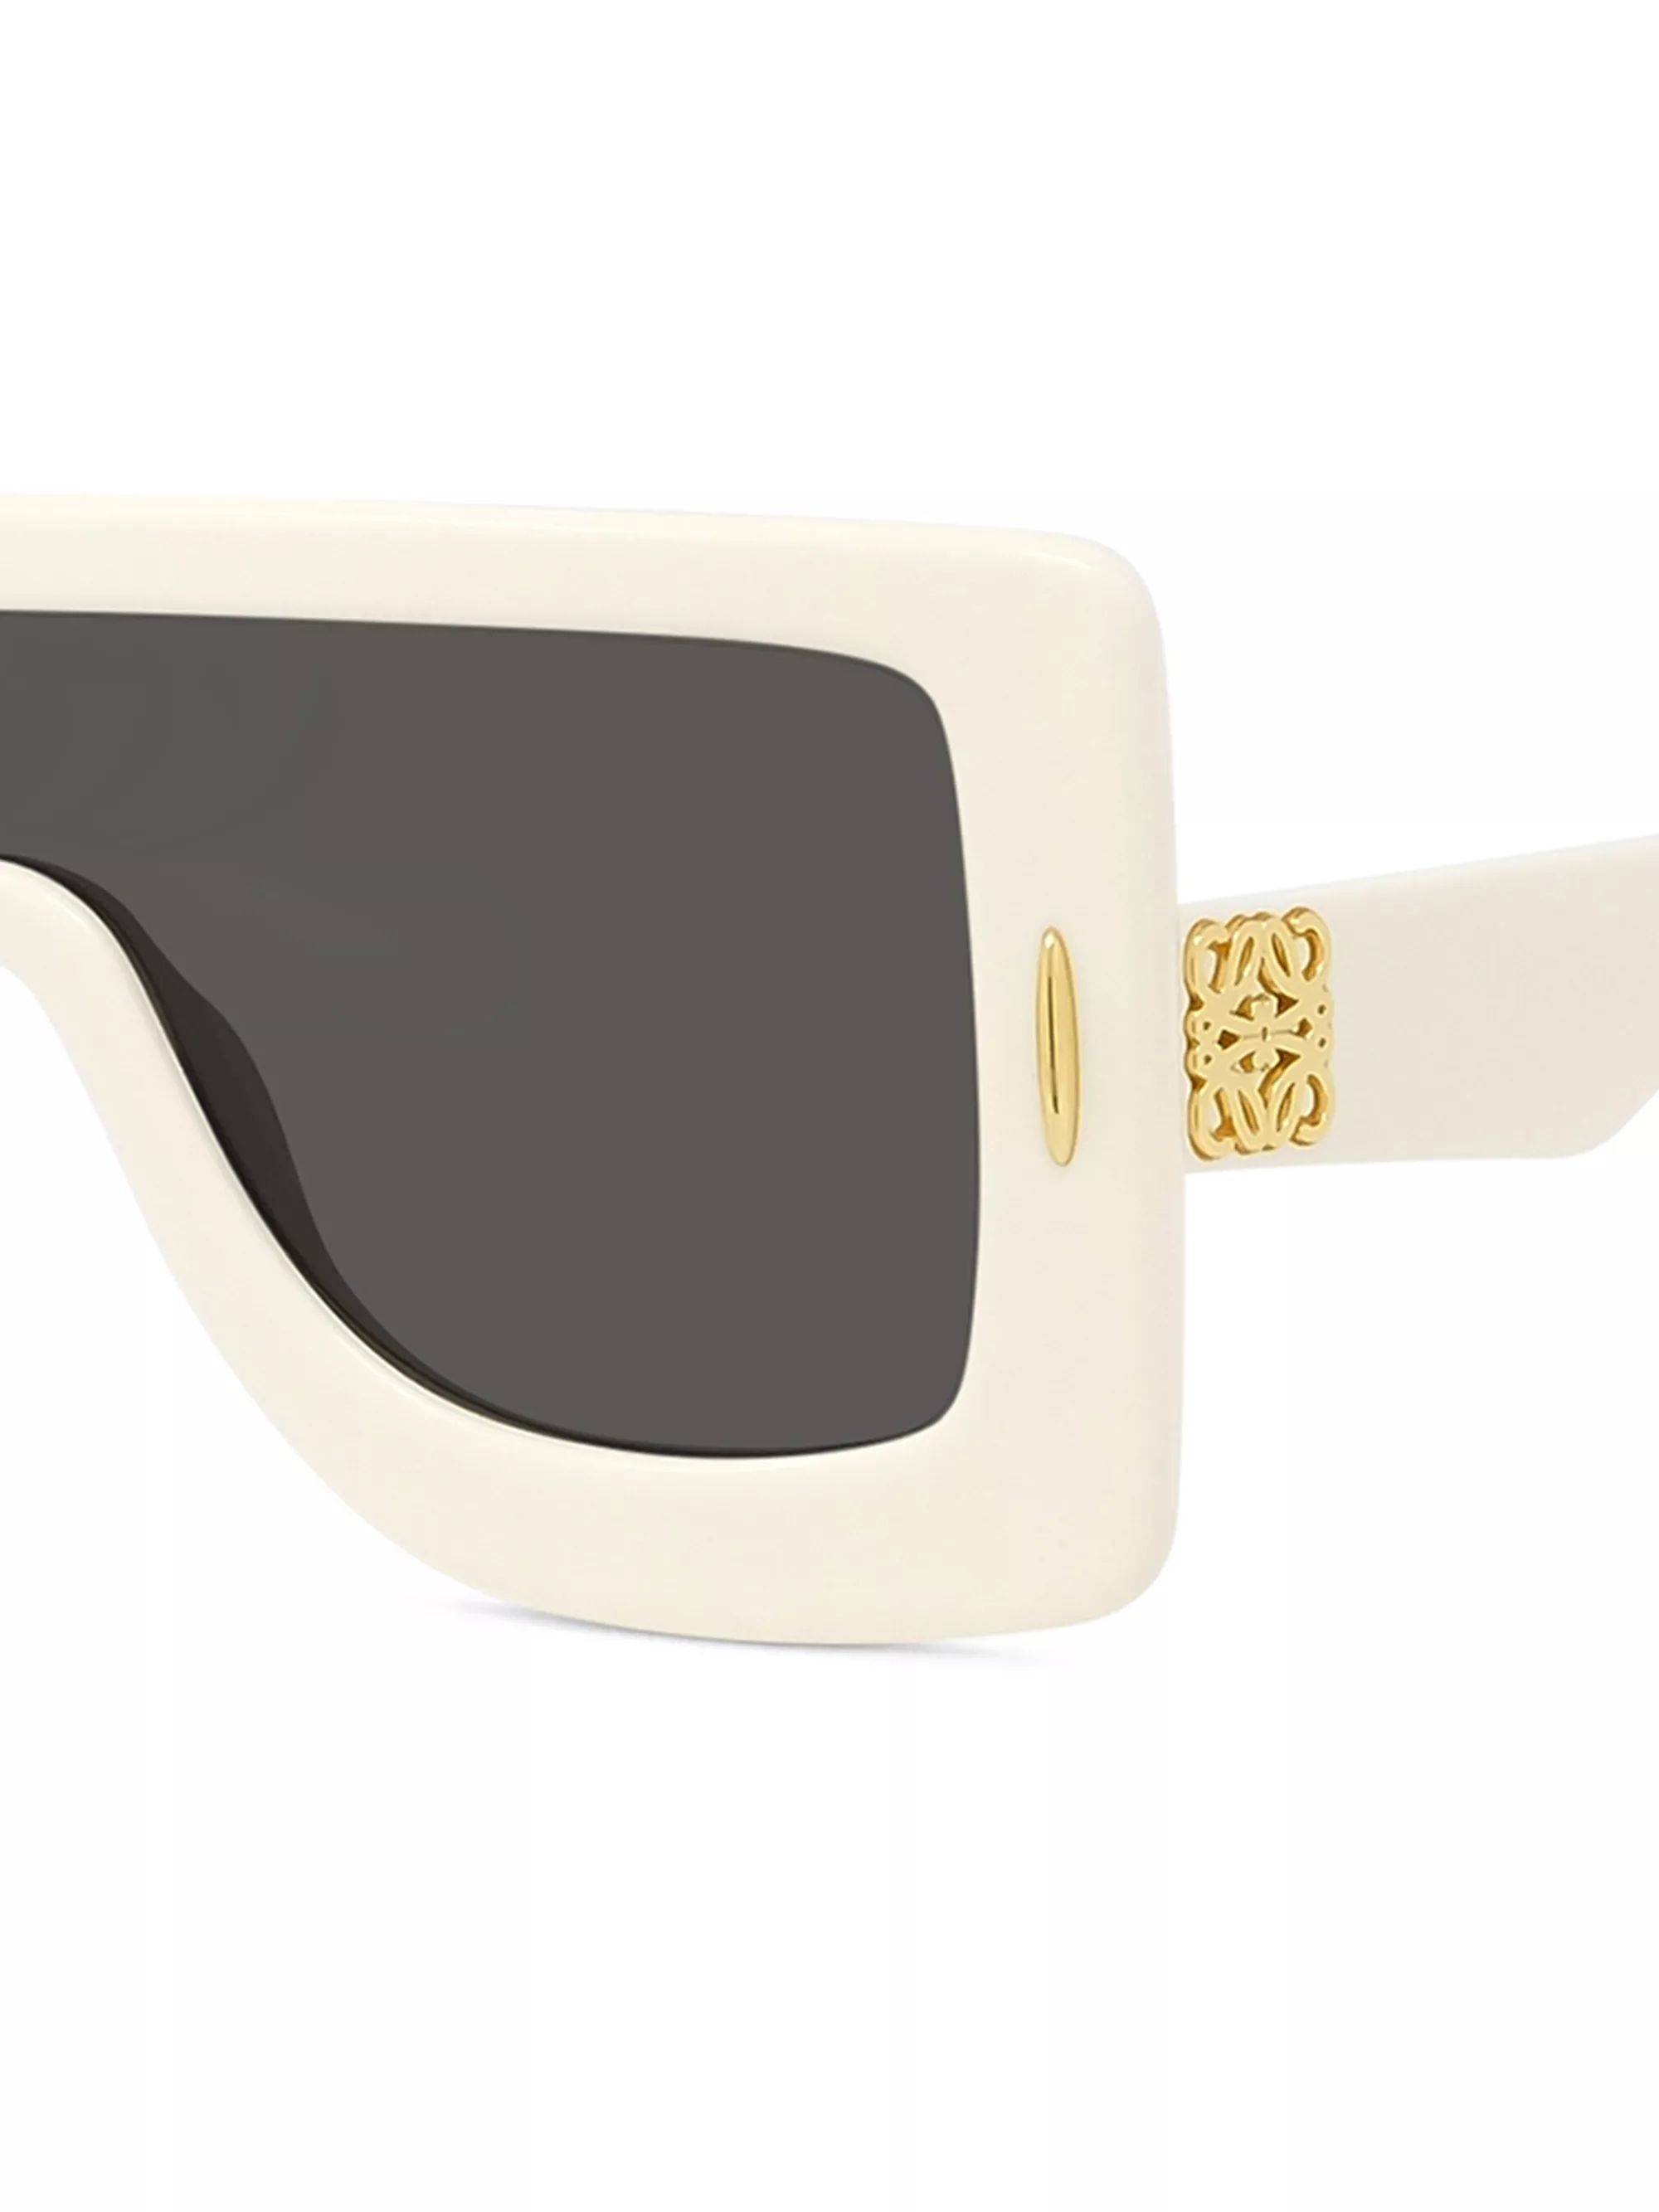 Chunky Anagram Mask Sunglasses | Saks Fifth Avenue